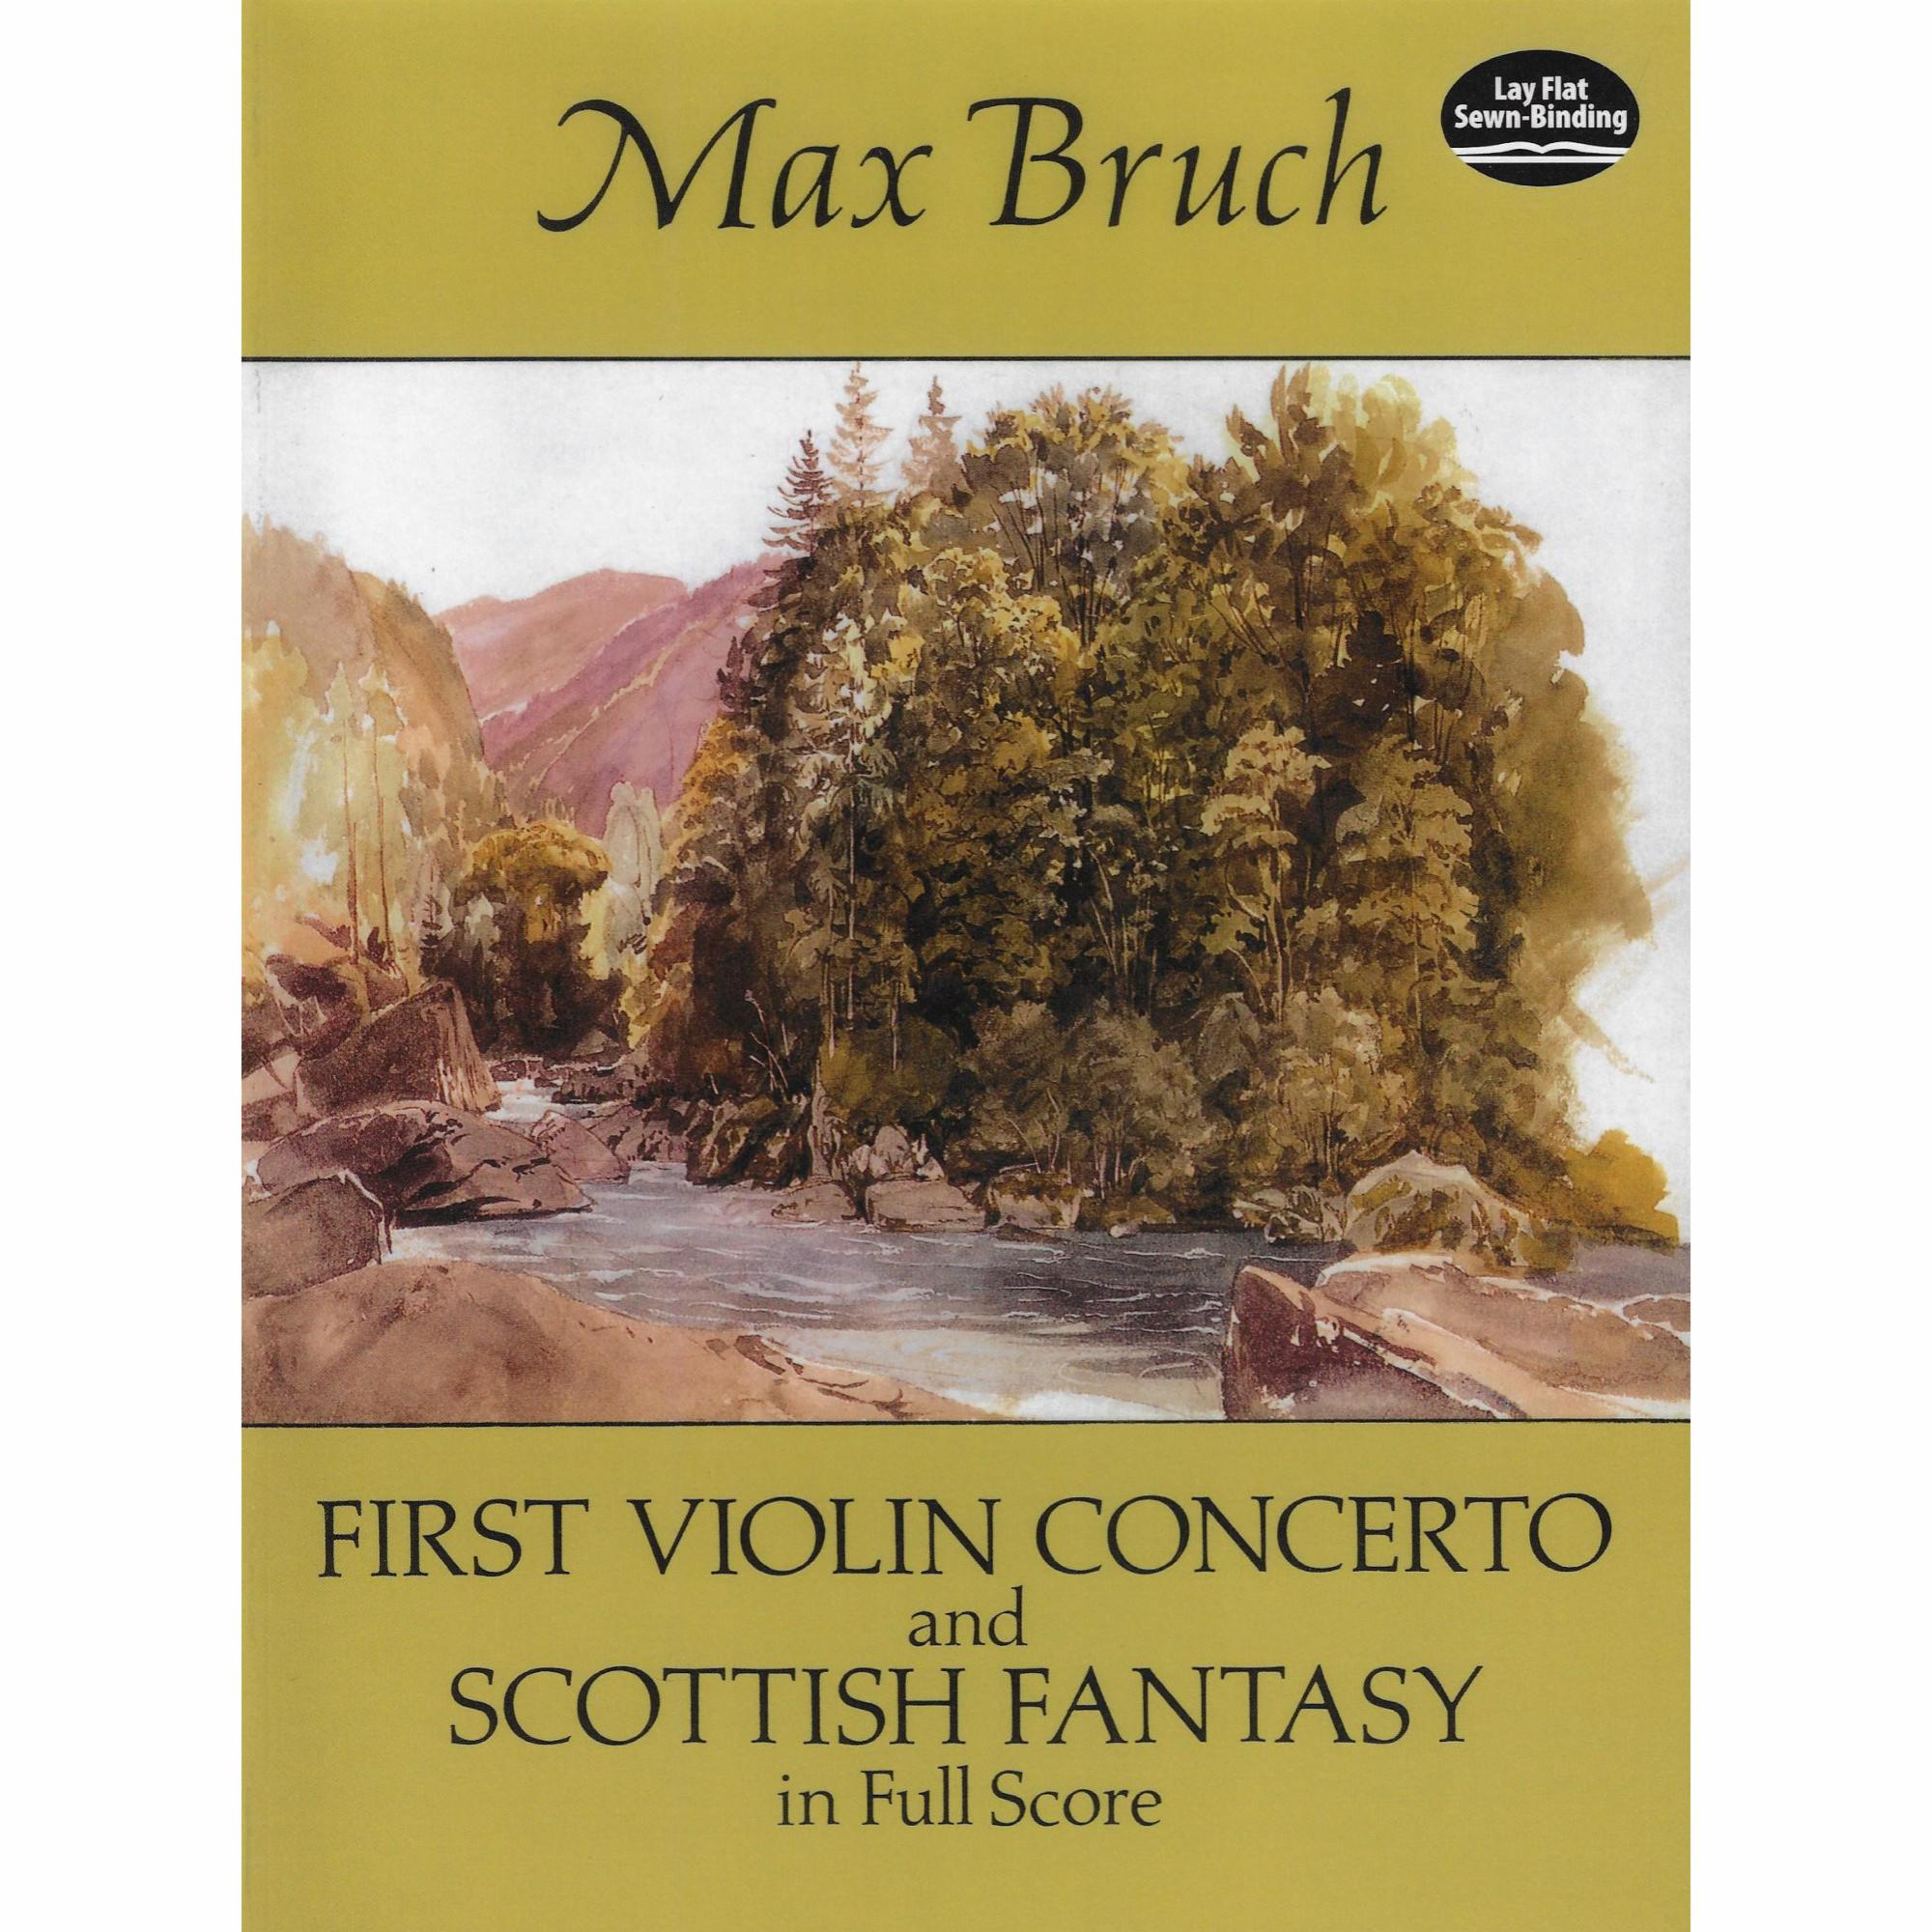 Bruch -- First Violin Concerto and Scottish Fantasy in Full Score